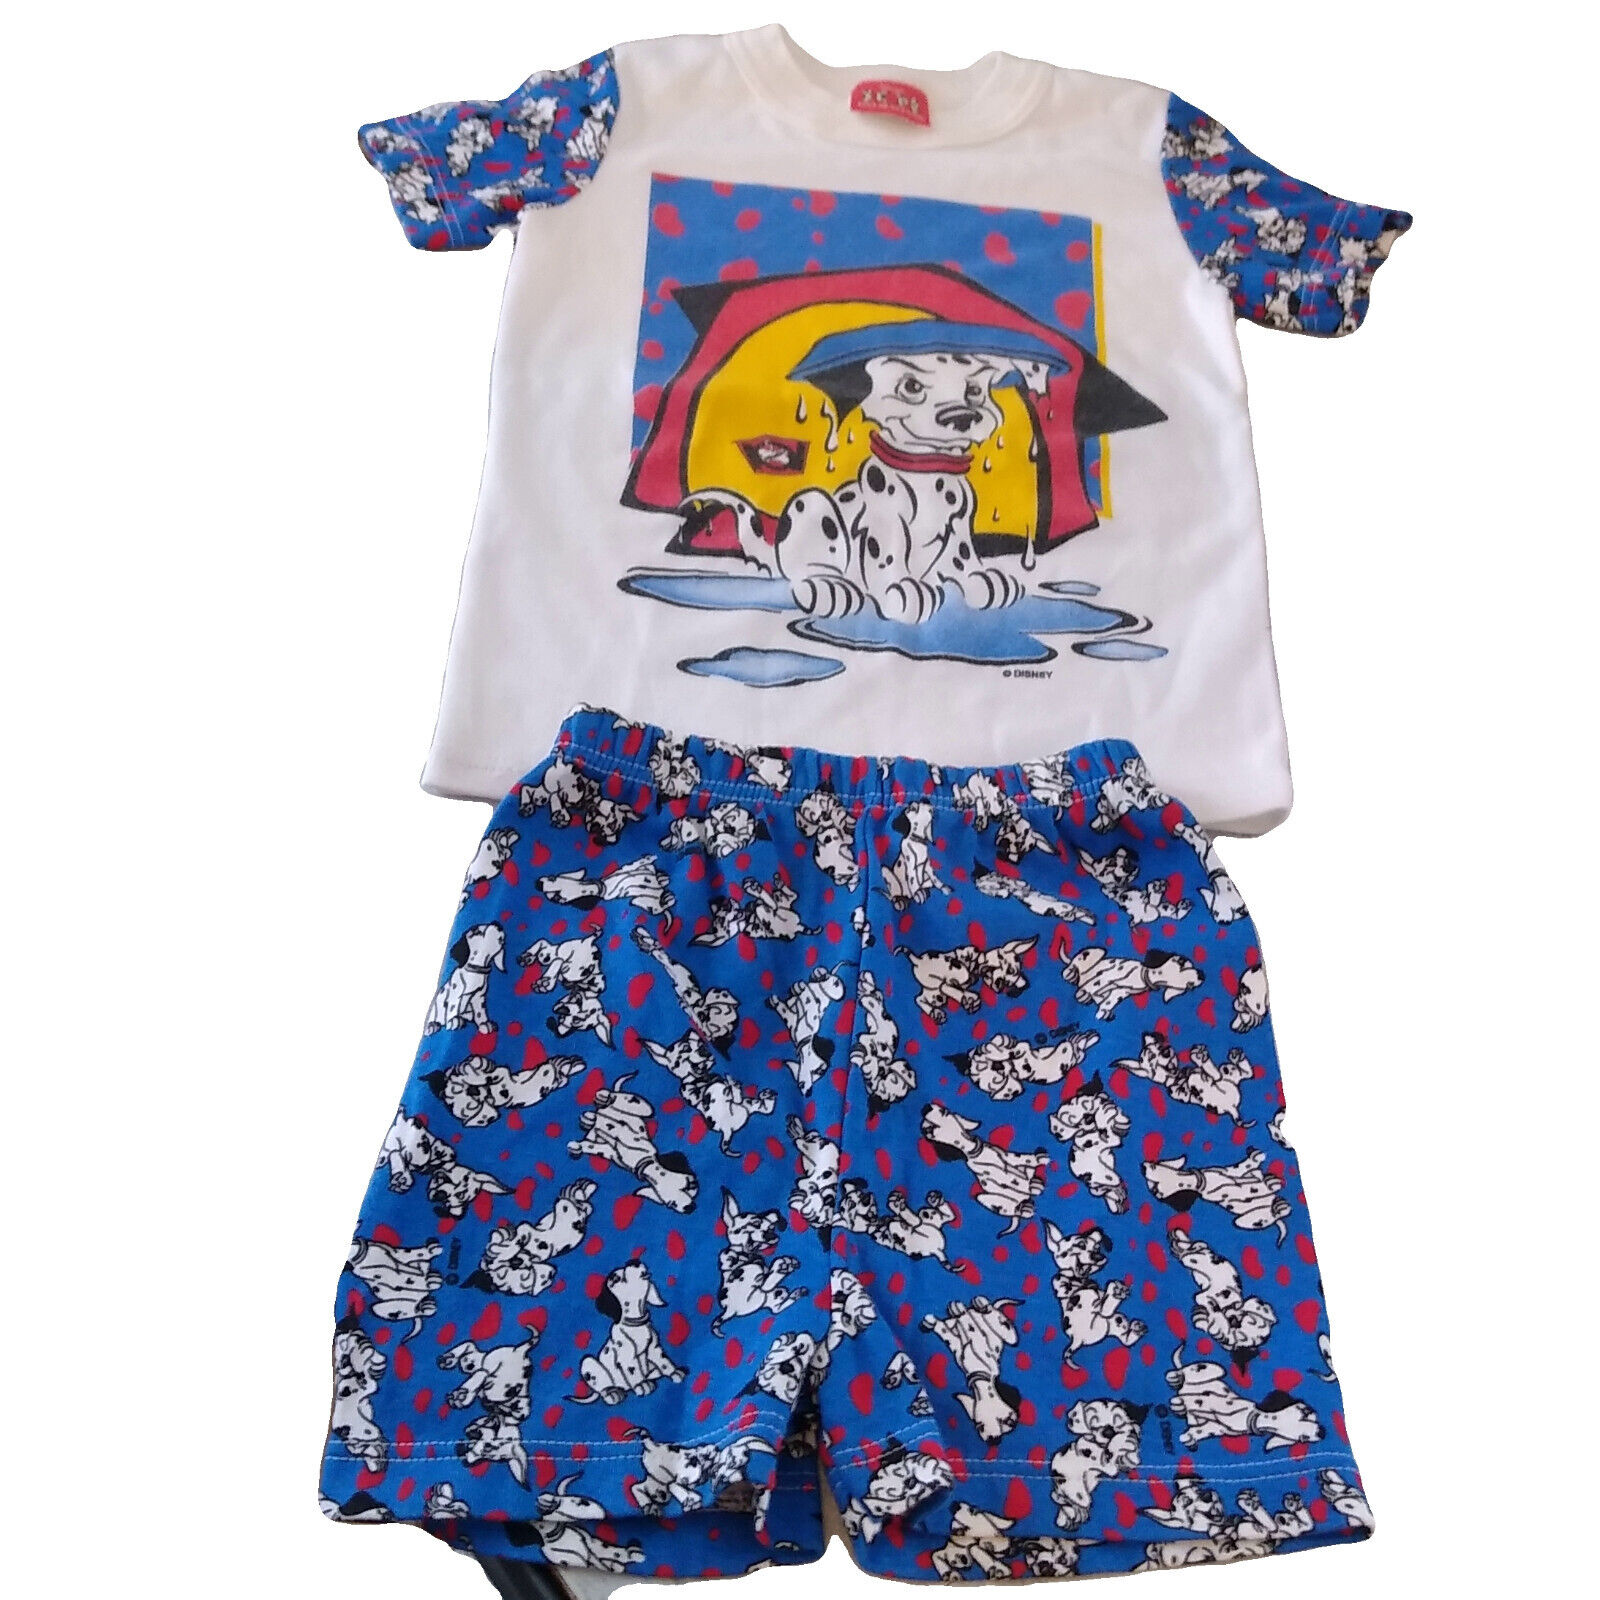 Vintage Disney Outfit Usa Childs Shirt Size 7 Shorts Size Lg